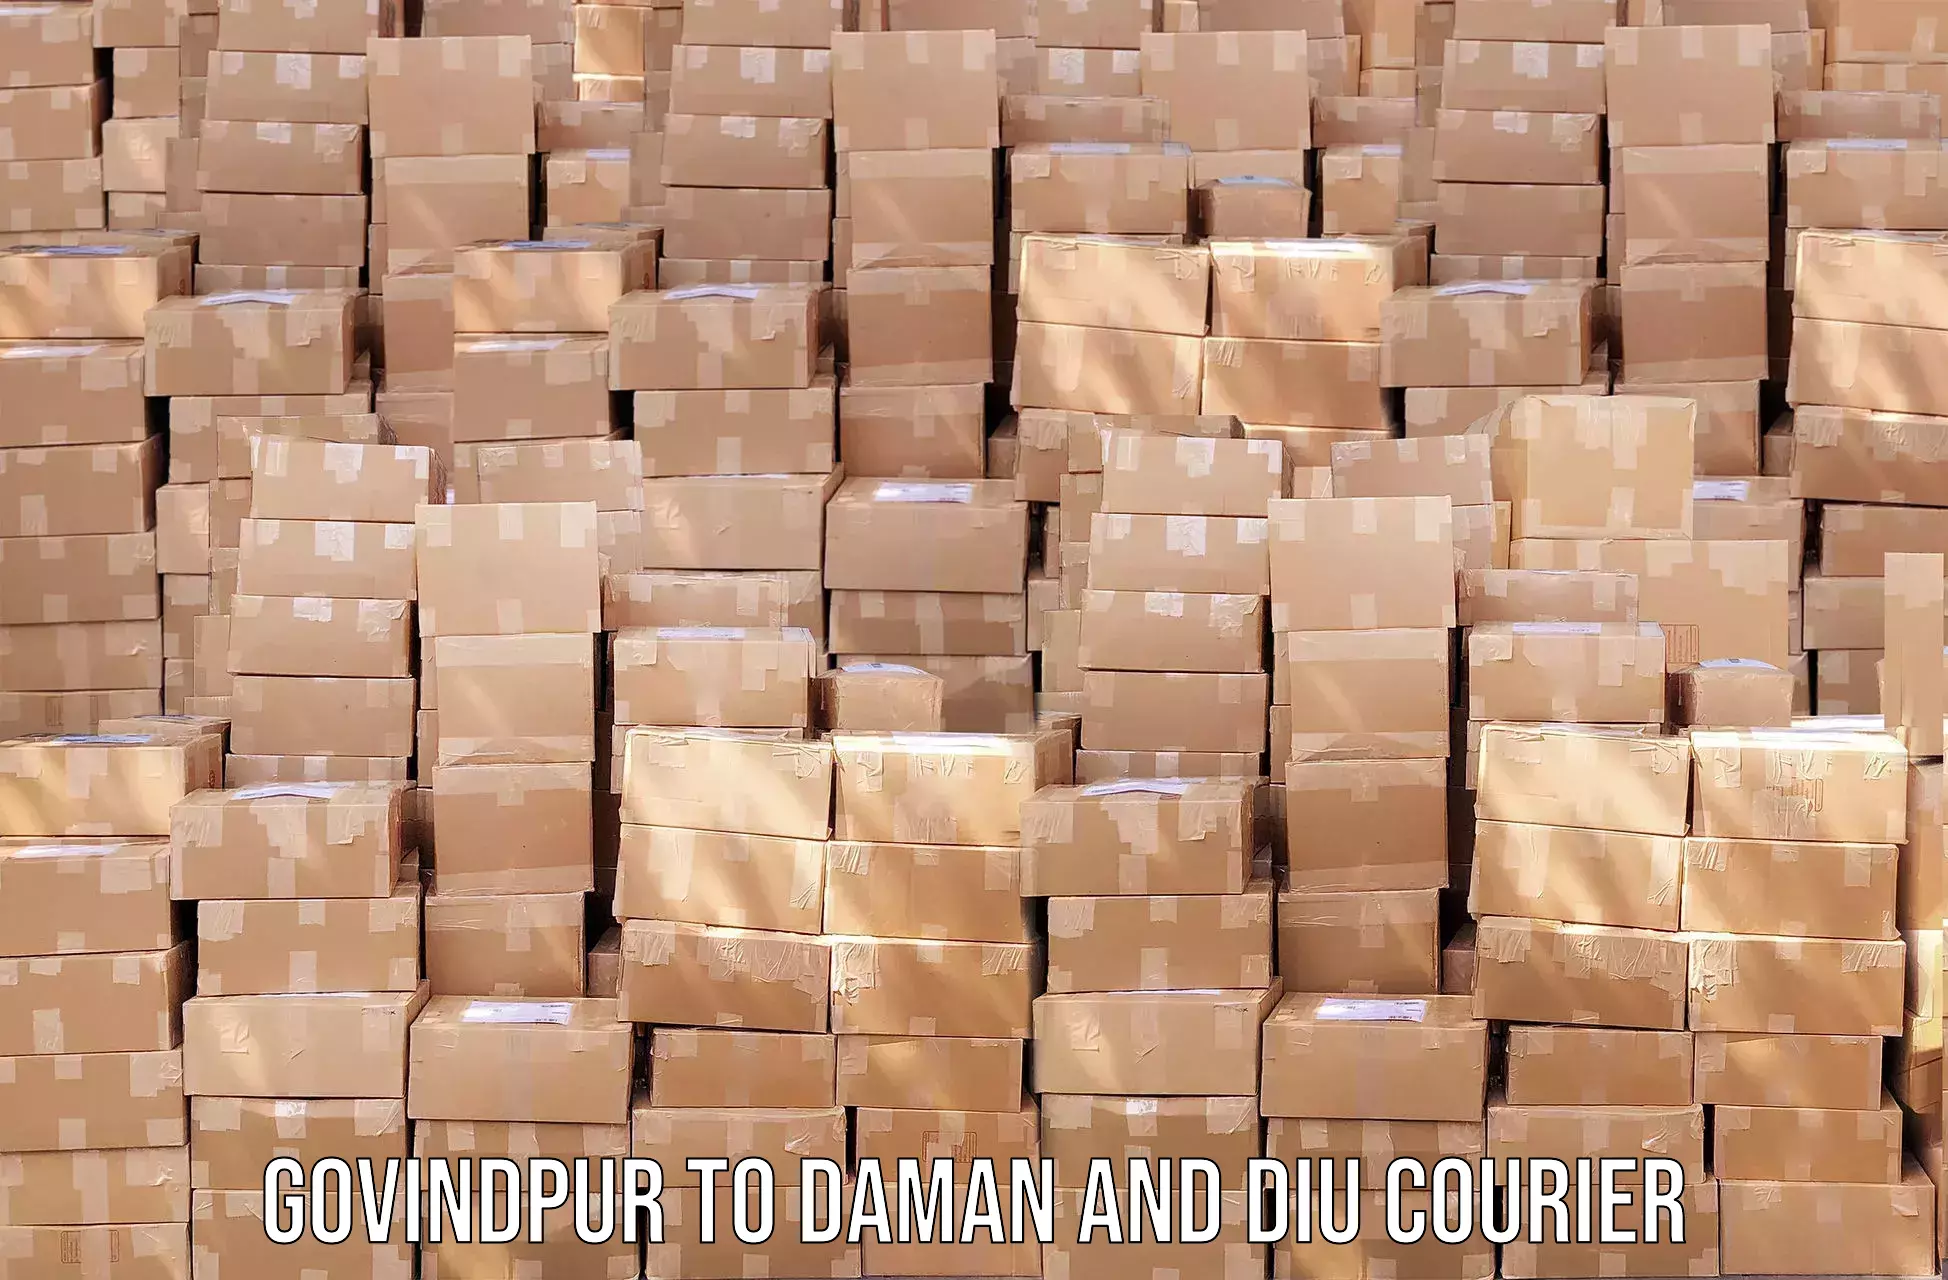 Personal parcel delivery Govindpur to Diu